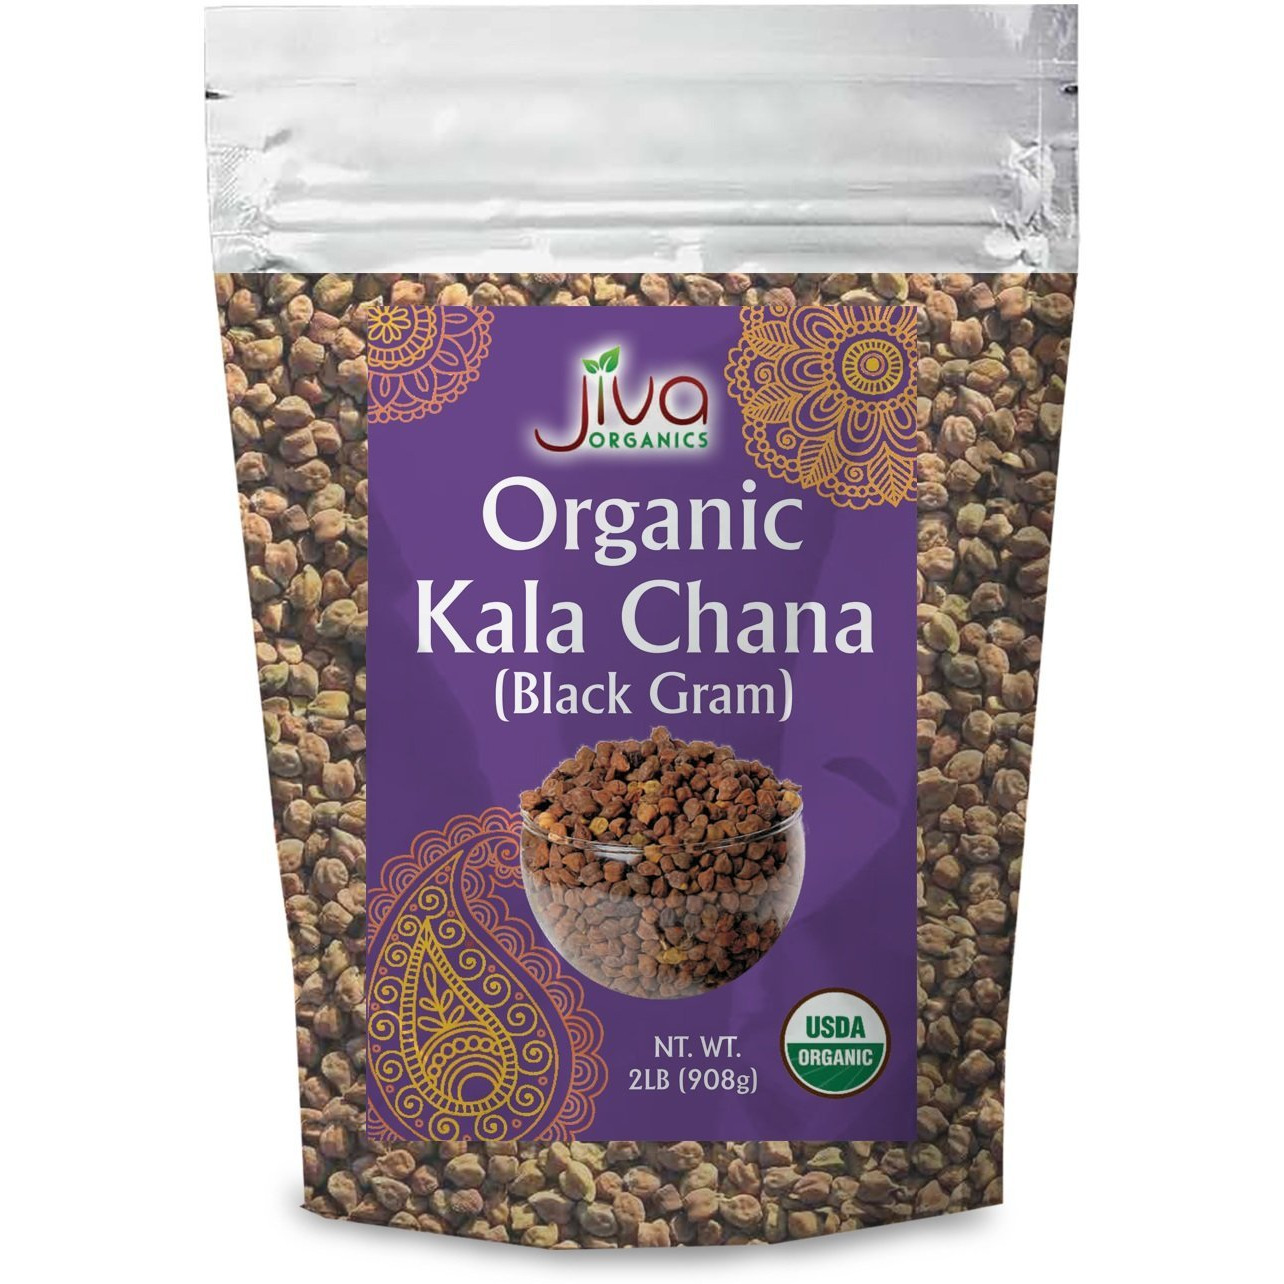 Jiva Organics Organic Kala Chana Black Gram - 2 Lb (908 Gm)